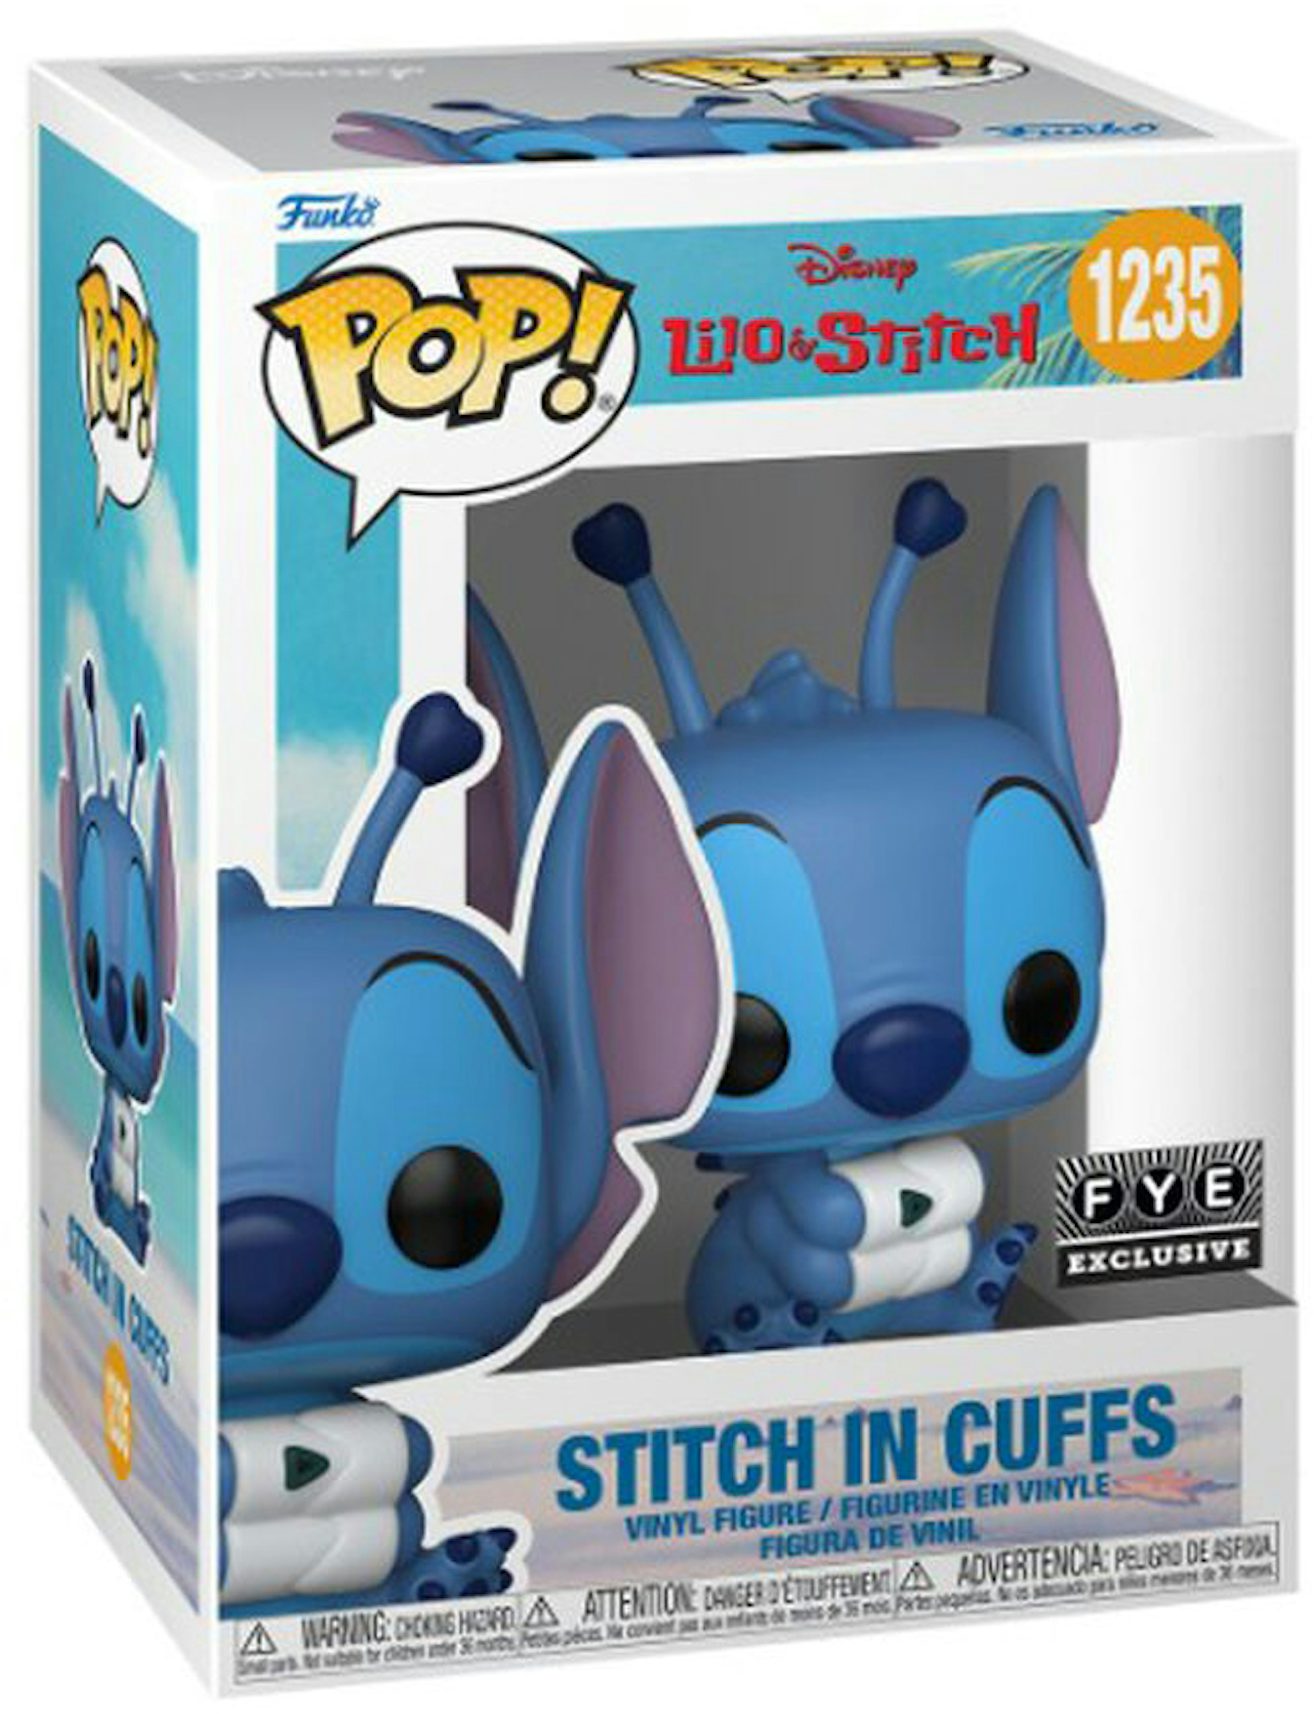 Figura Funko Pop Lilo y Stitch Stitch 10'' Super Sized 1046